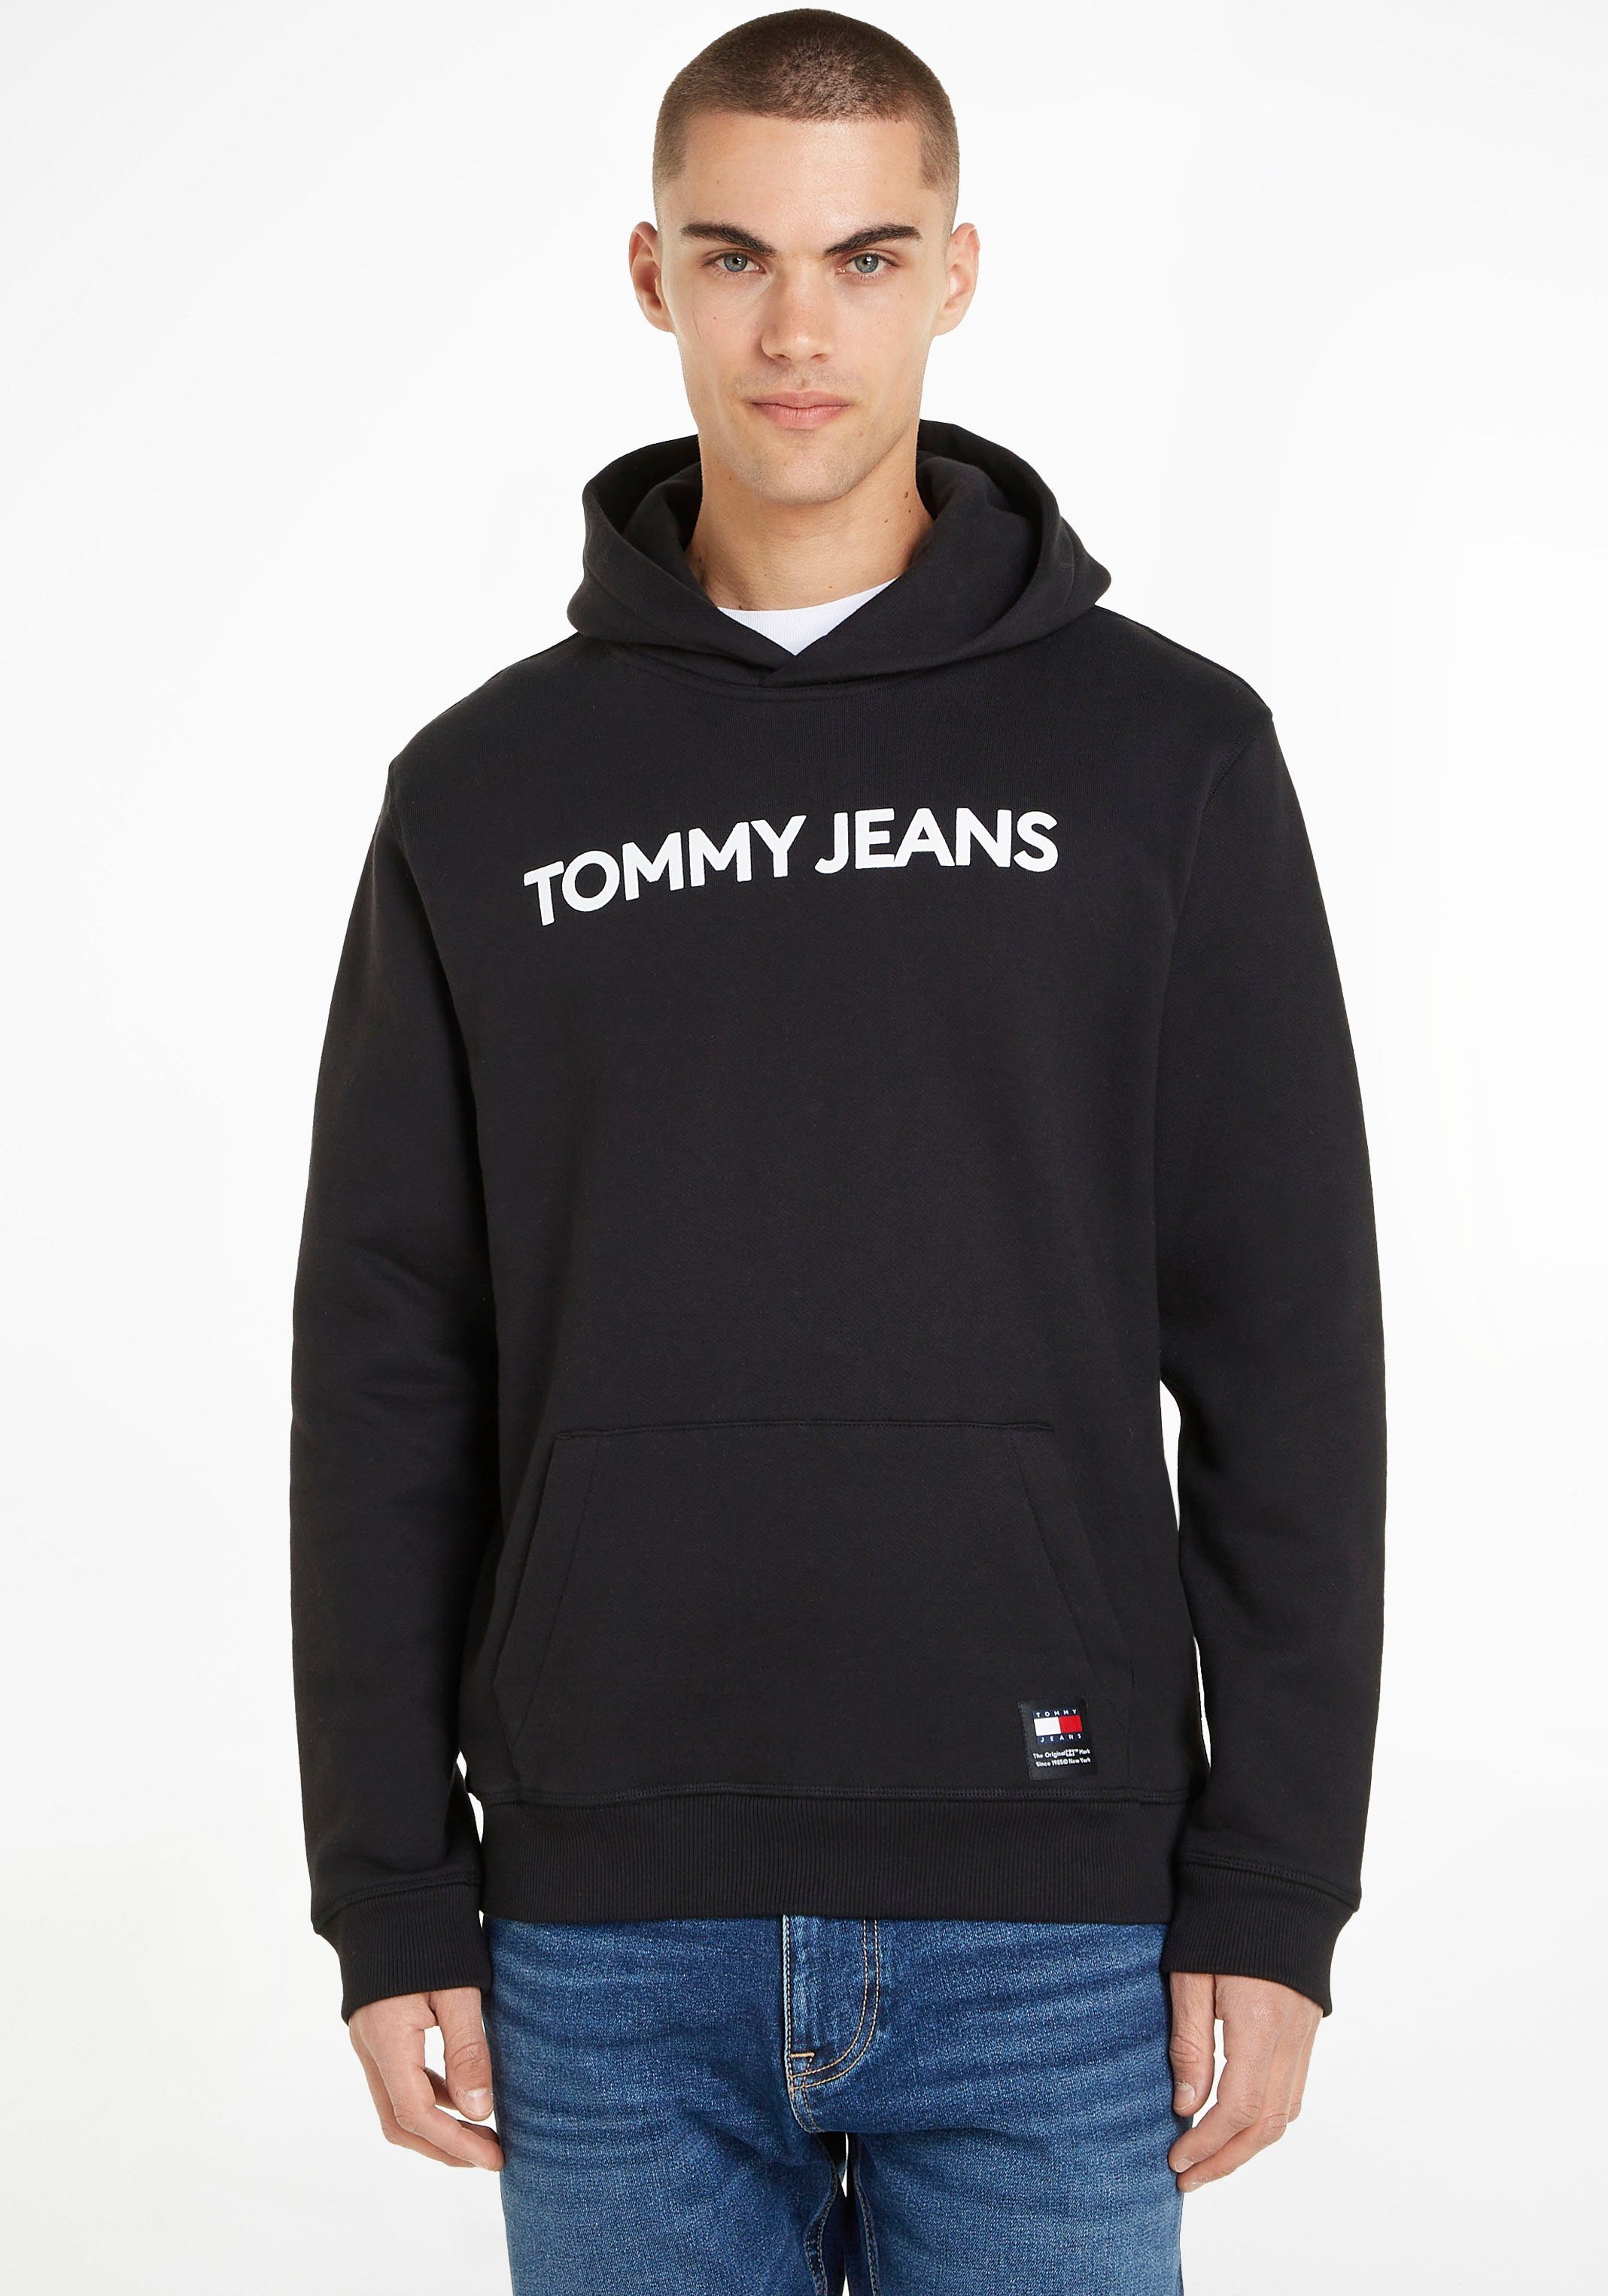 REG CLASSICS TJM Tommy EXT BOLD Jeans Hoodie HOODIE Plus